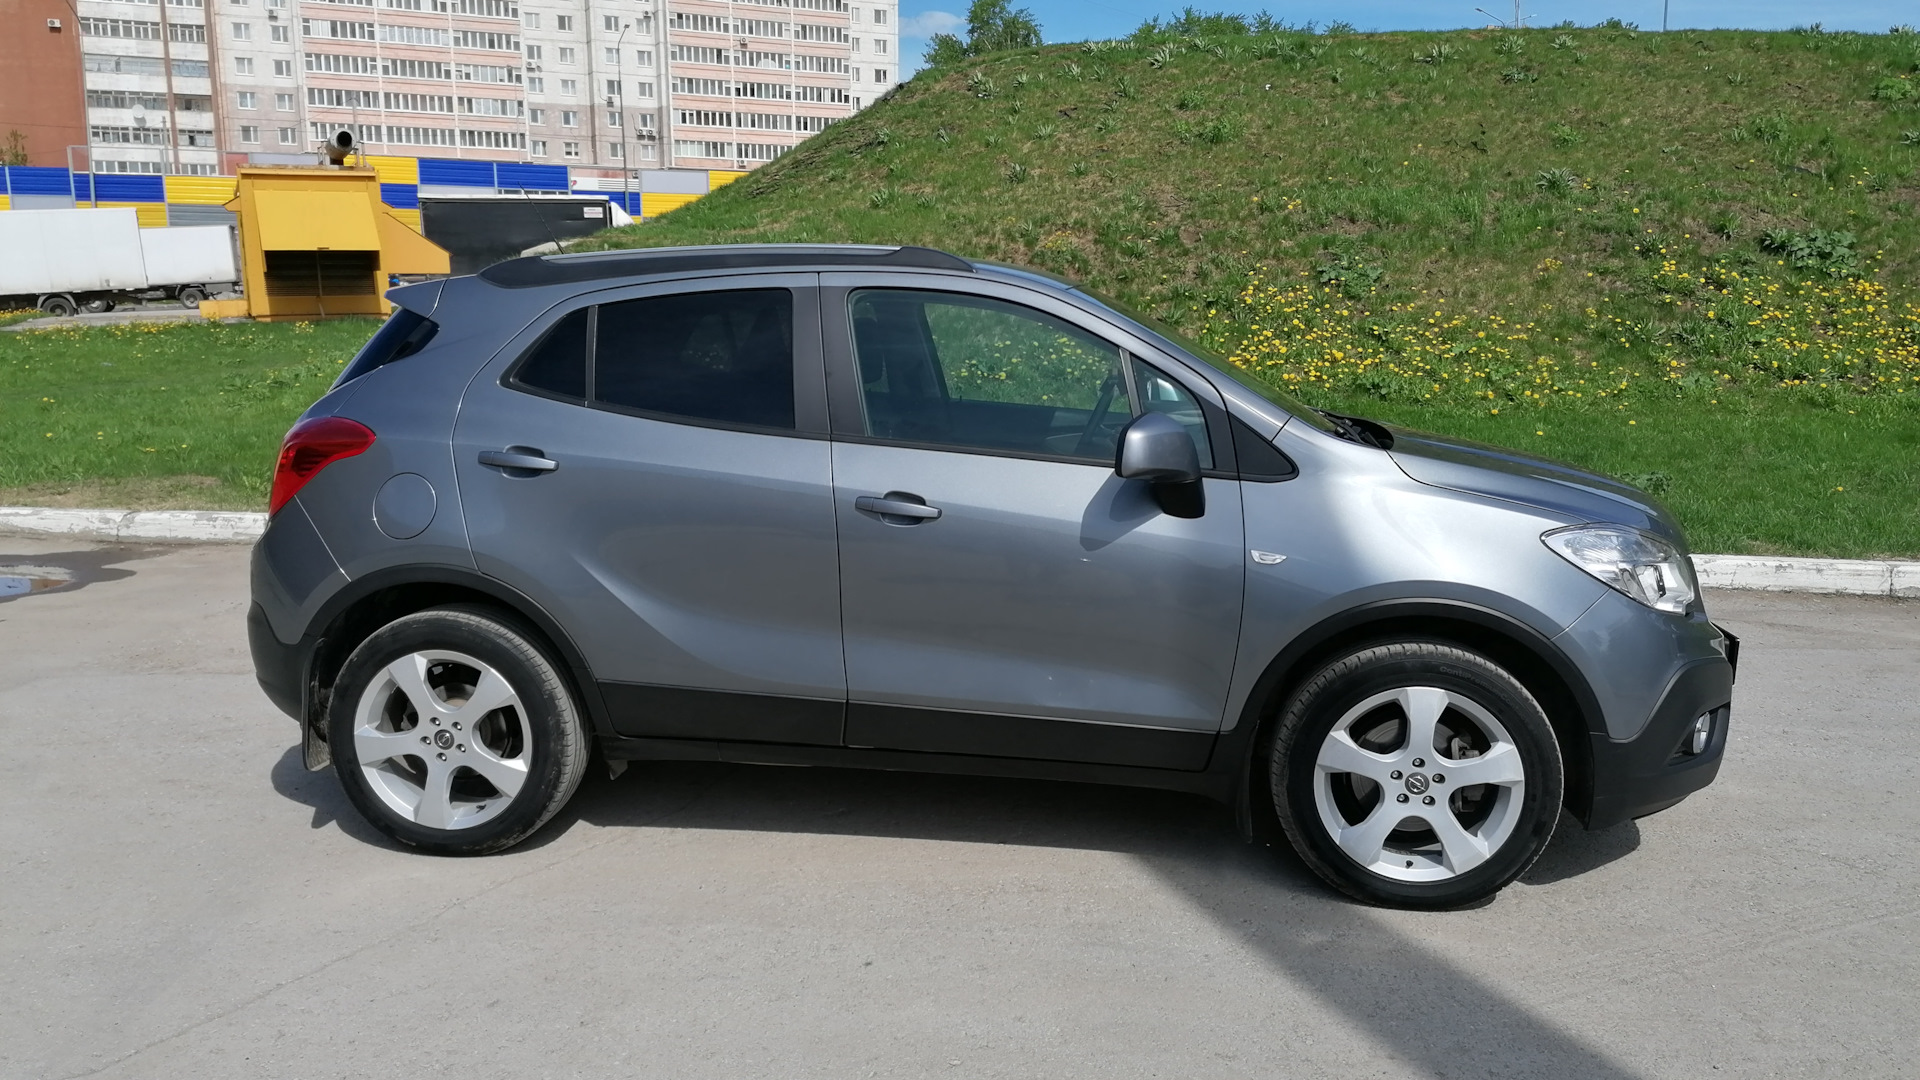 Opel Mokka серый. Opel Mokka 1.8 МТ вес. Opel Mokka 2012 — 2016 i серебристый хетчбэк. Opel Mokka 2012 — 2016 i белый. Купить опель мокка турбо